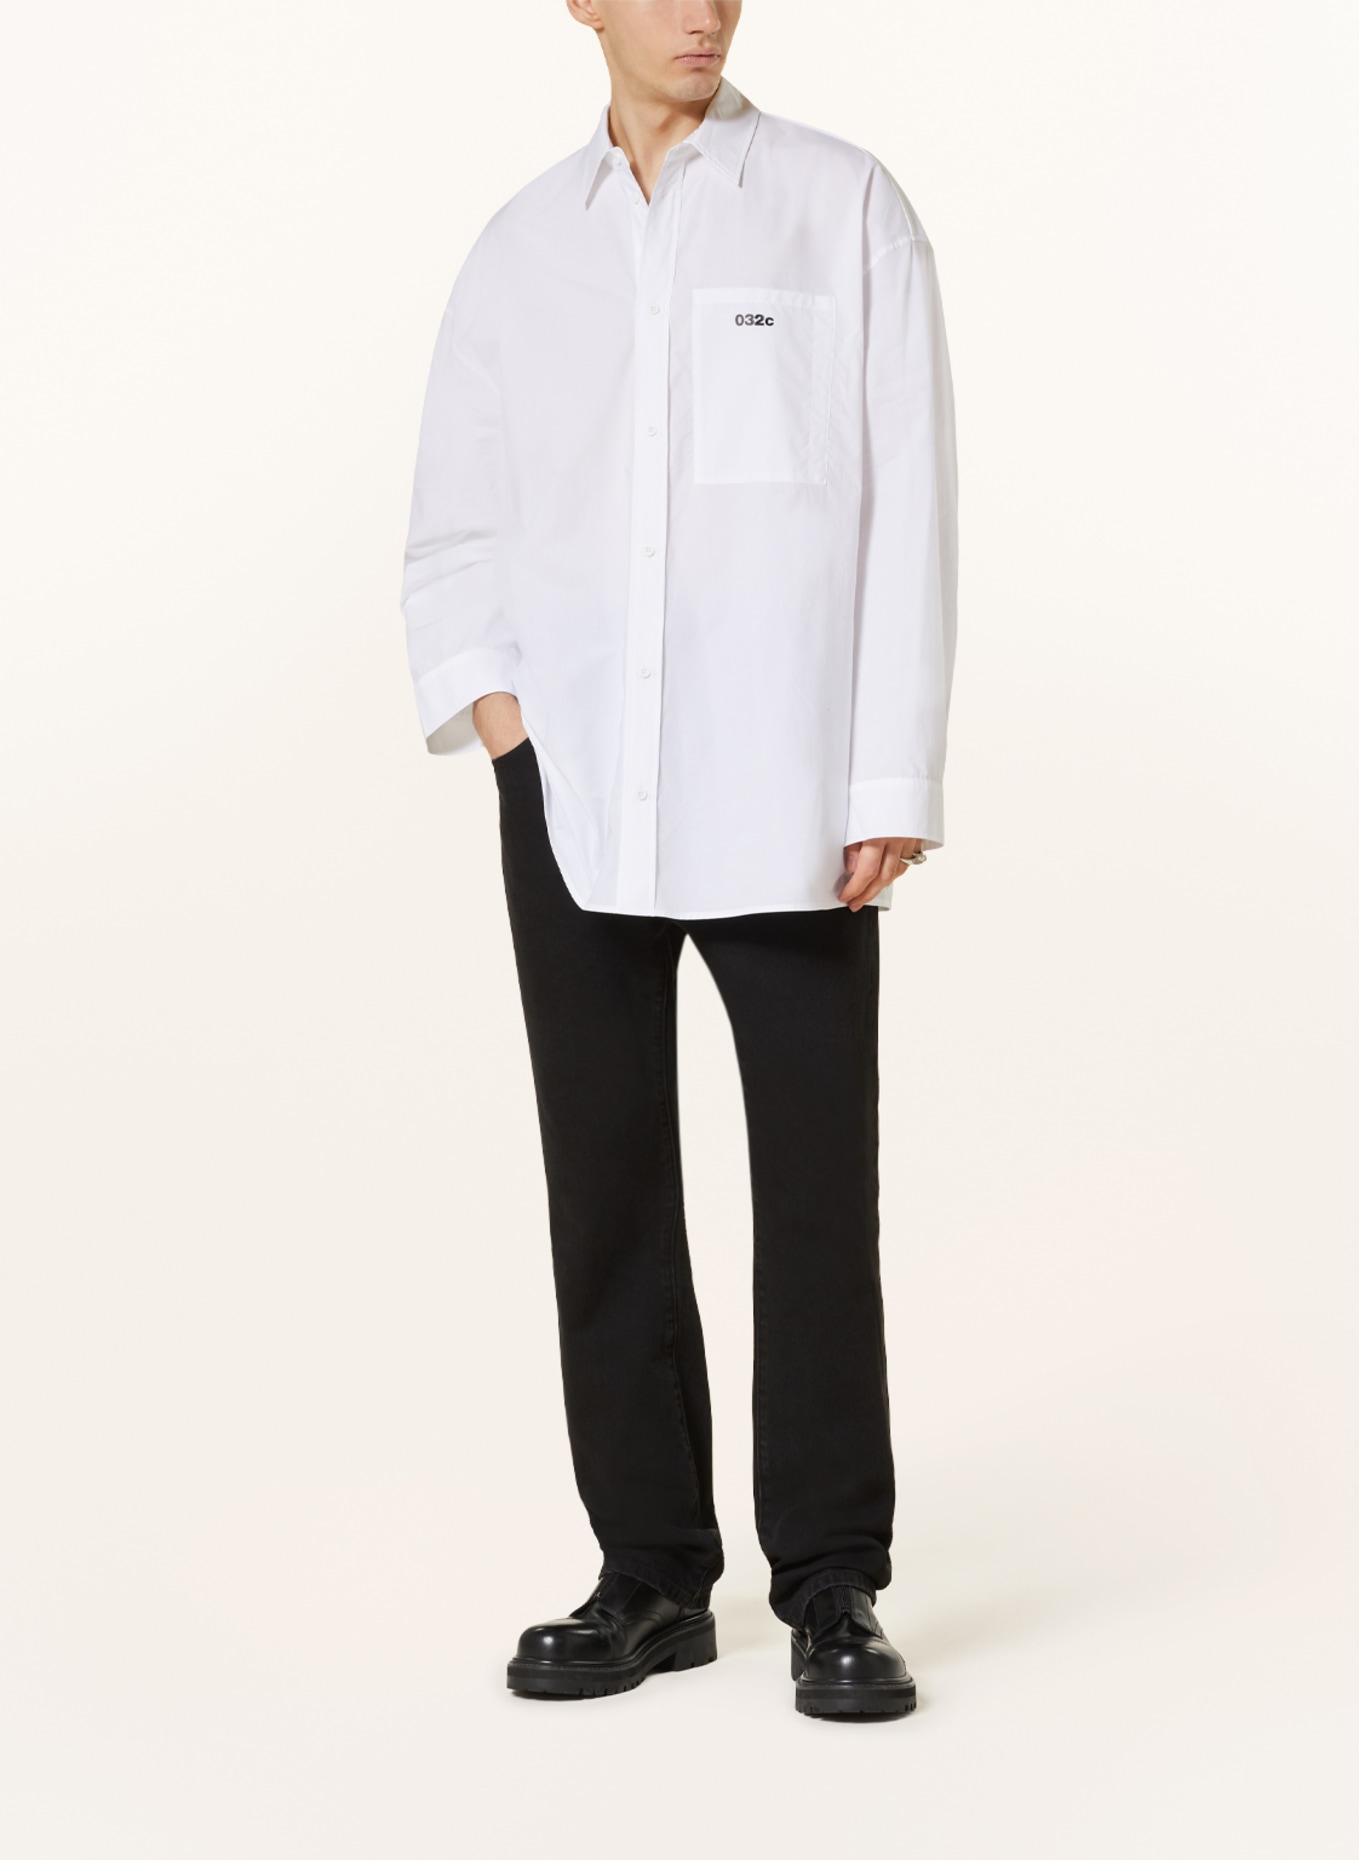 032c Shirt comfort fit, Color: WHITE (Image 3)